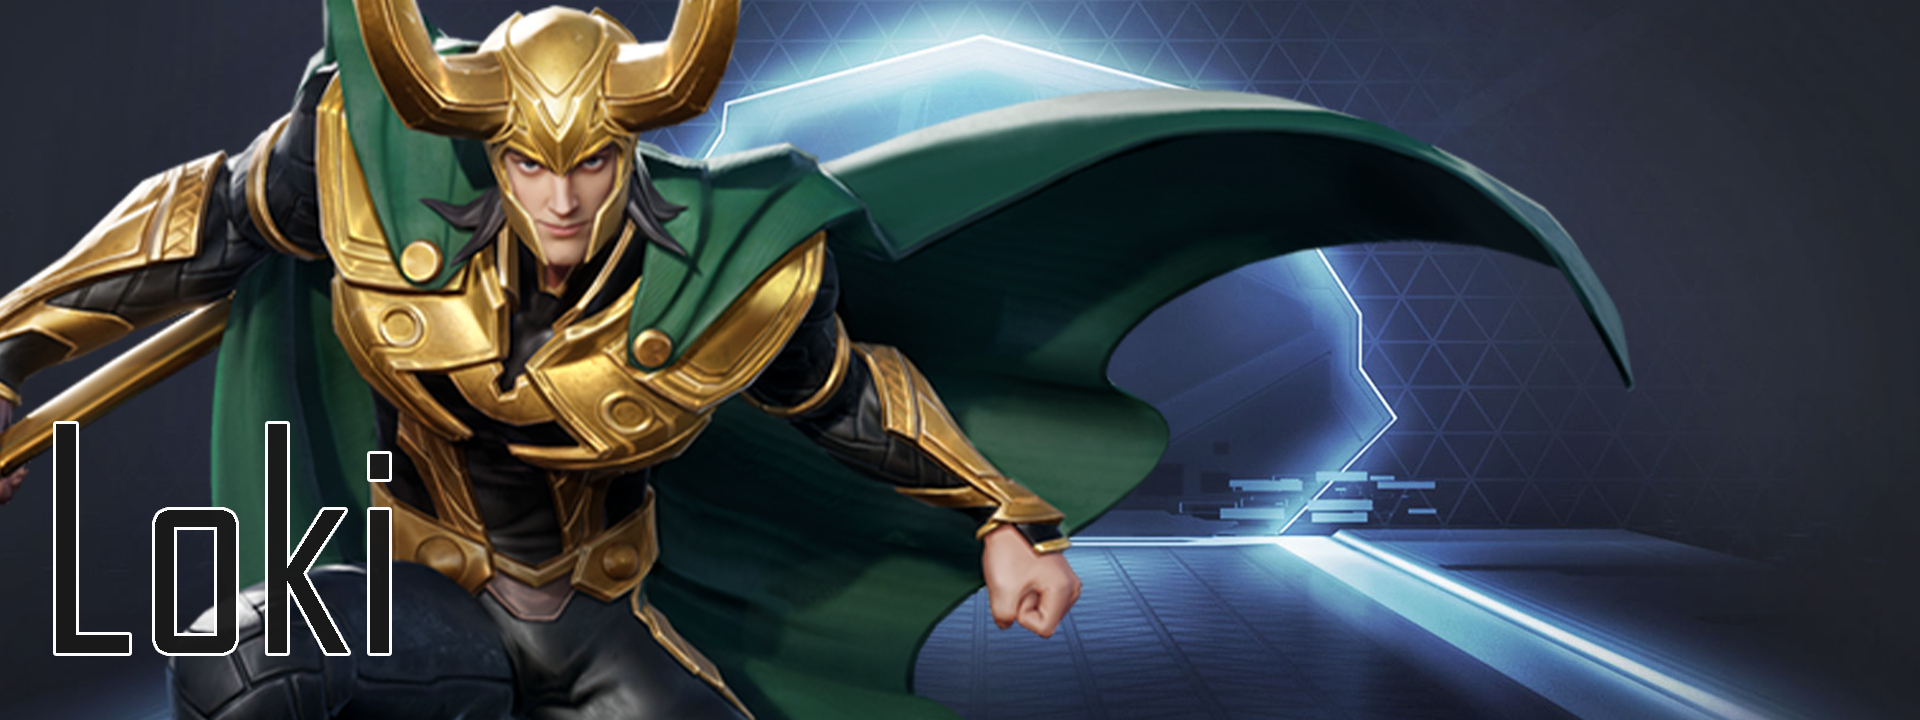 Loki - Marvel Super War Guide and Tips